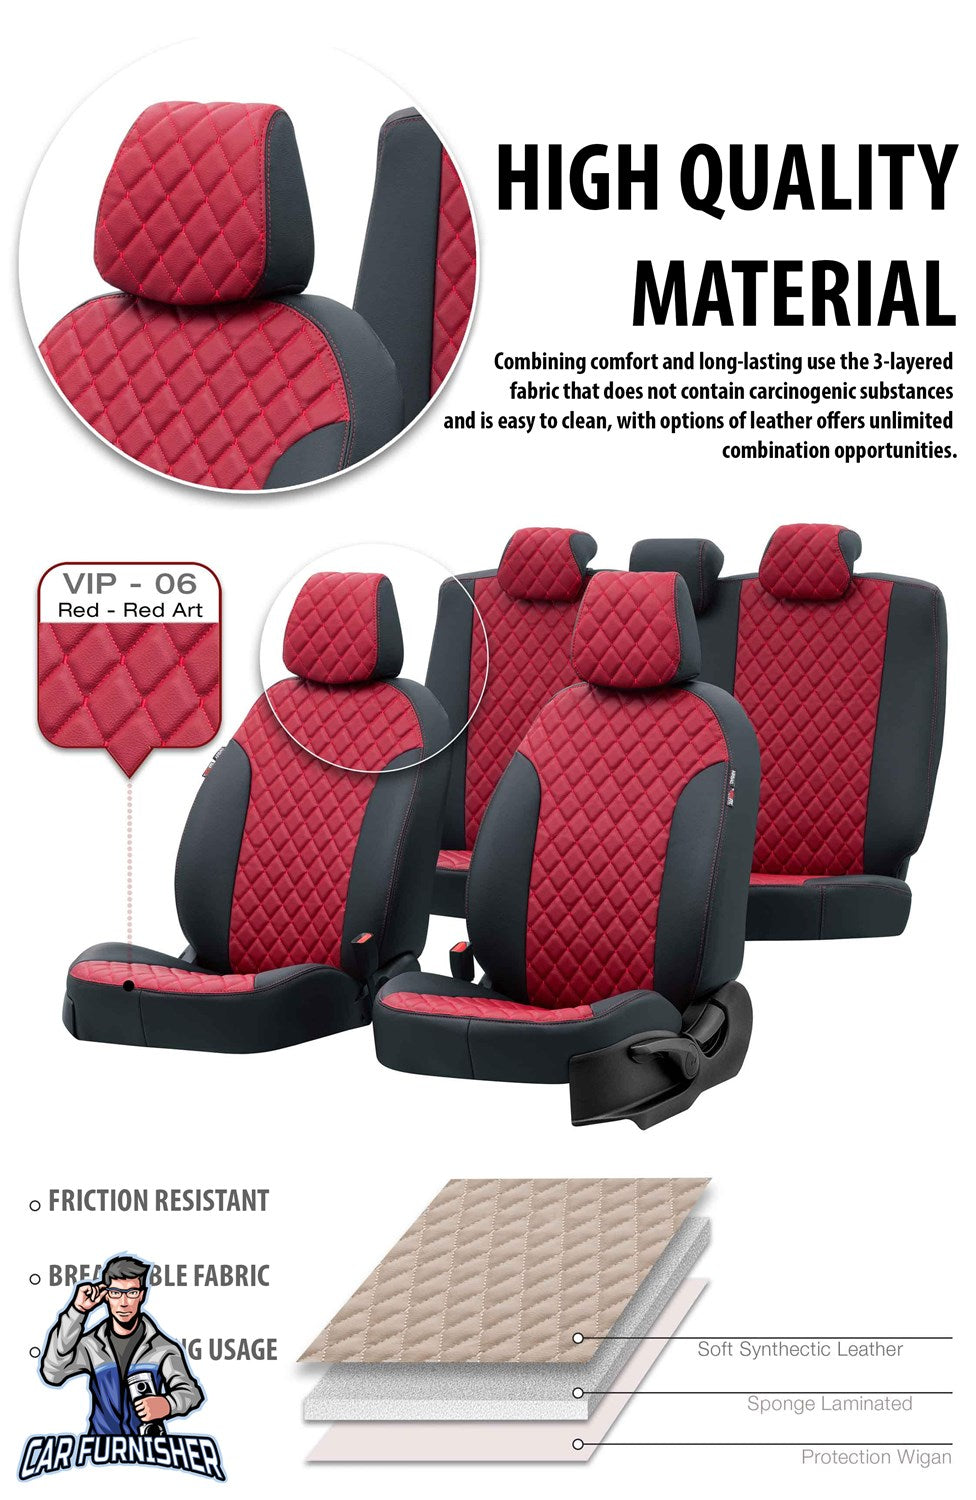 Fiat Panda Seat Covers Madrid Leather Design Dark Gray Leather